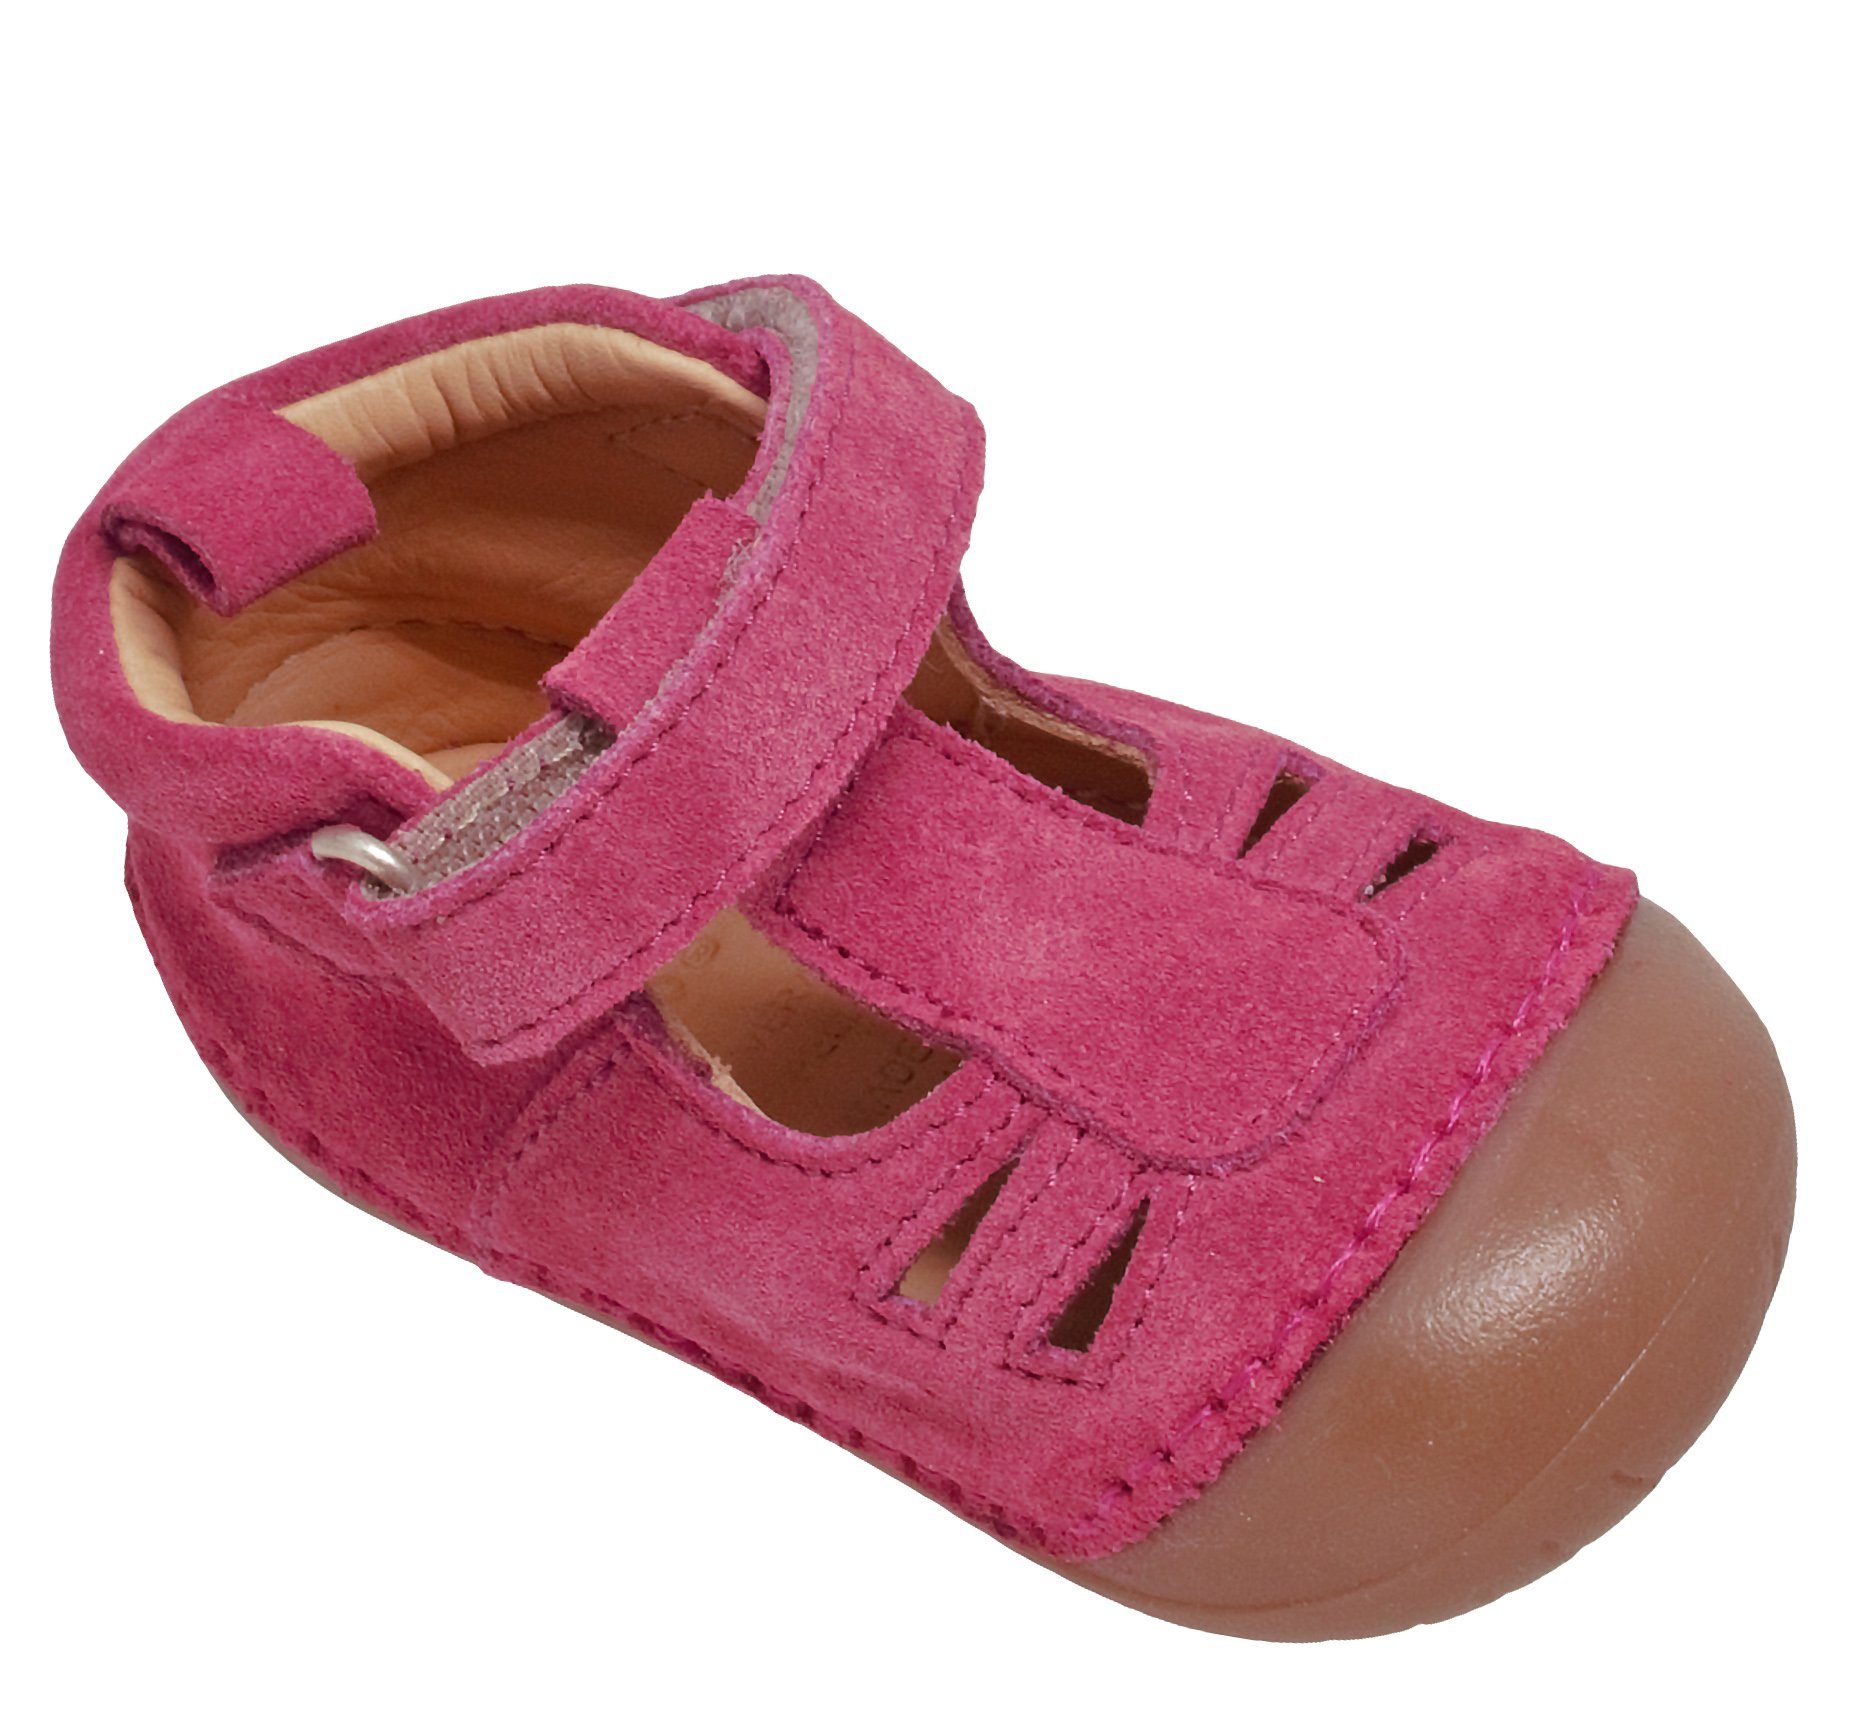 334 Baby Ocra Schuhe Ocra Krabbelschuh Lauflernschuhe Klett Mädchen Pink Leder